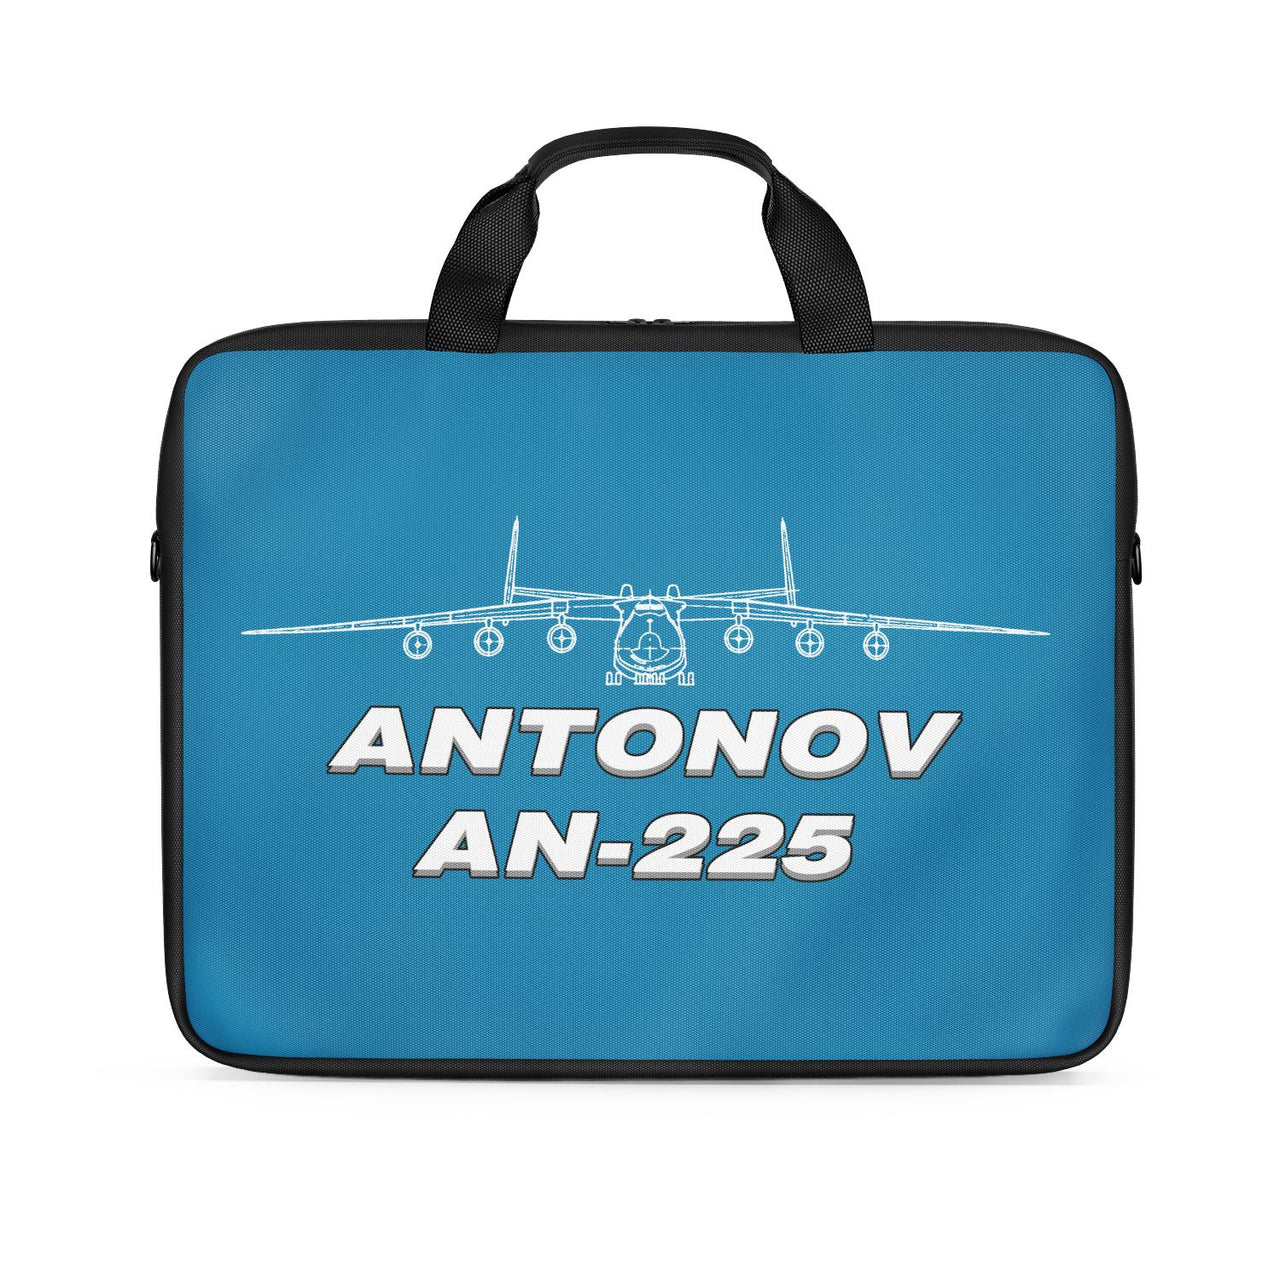 Antonov AN-225 (26) Designed Laptop & Tablet Bags